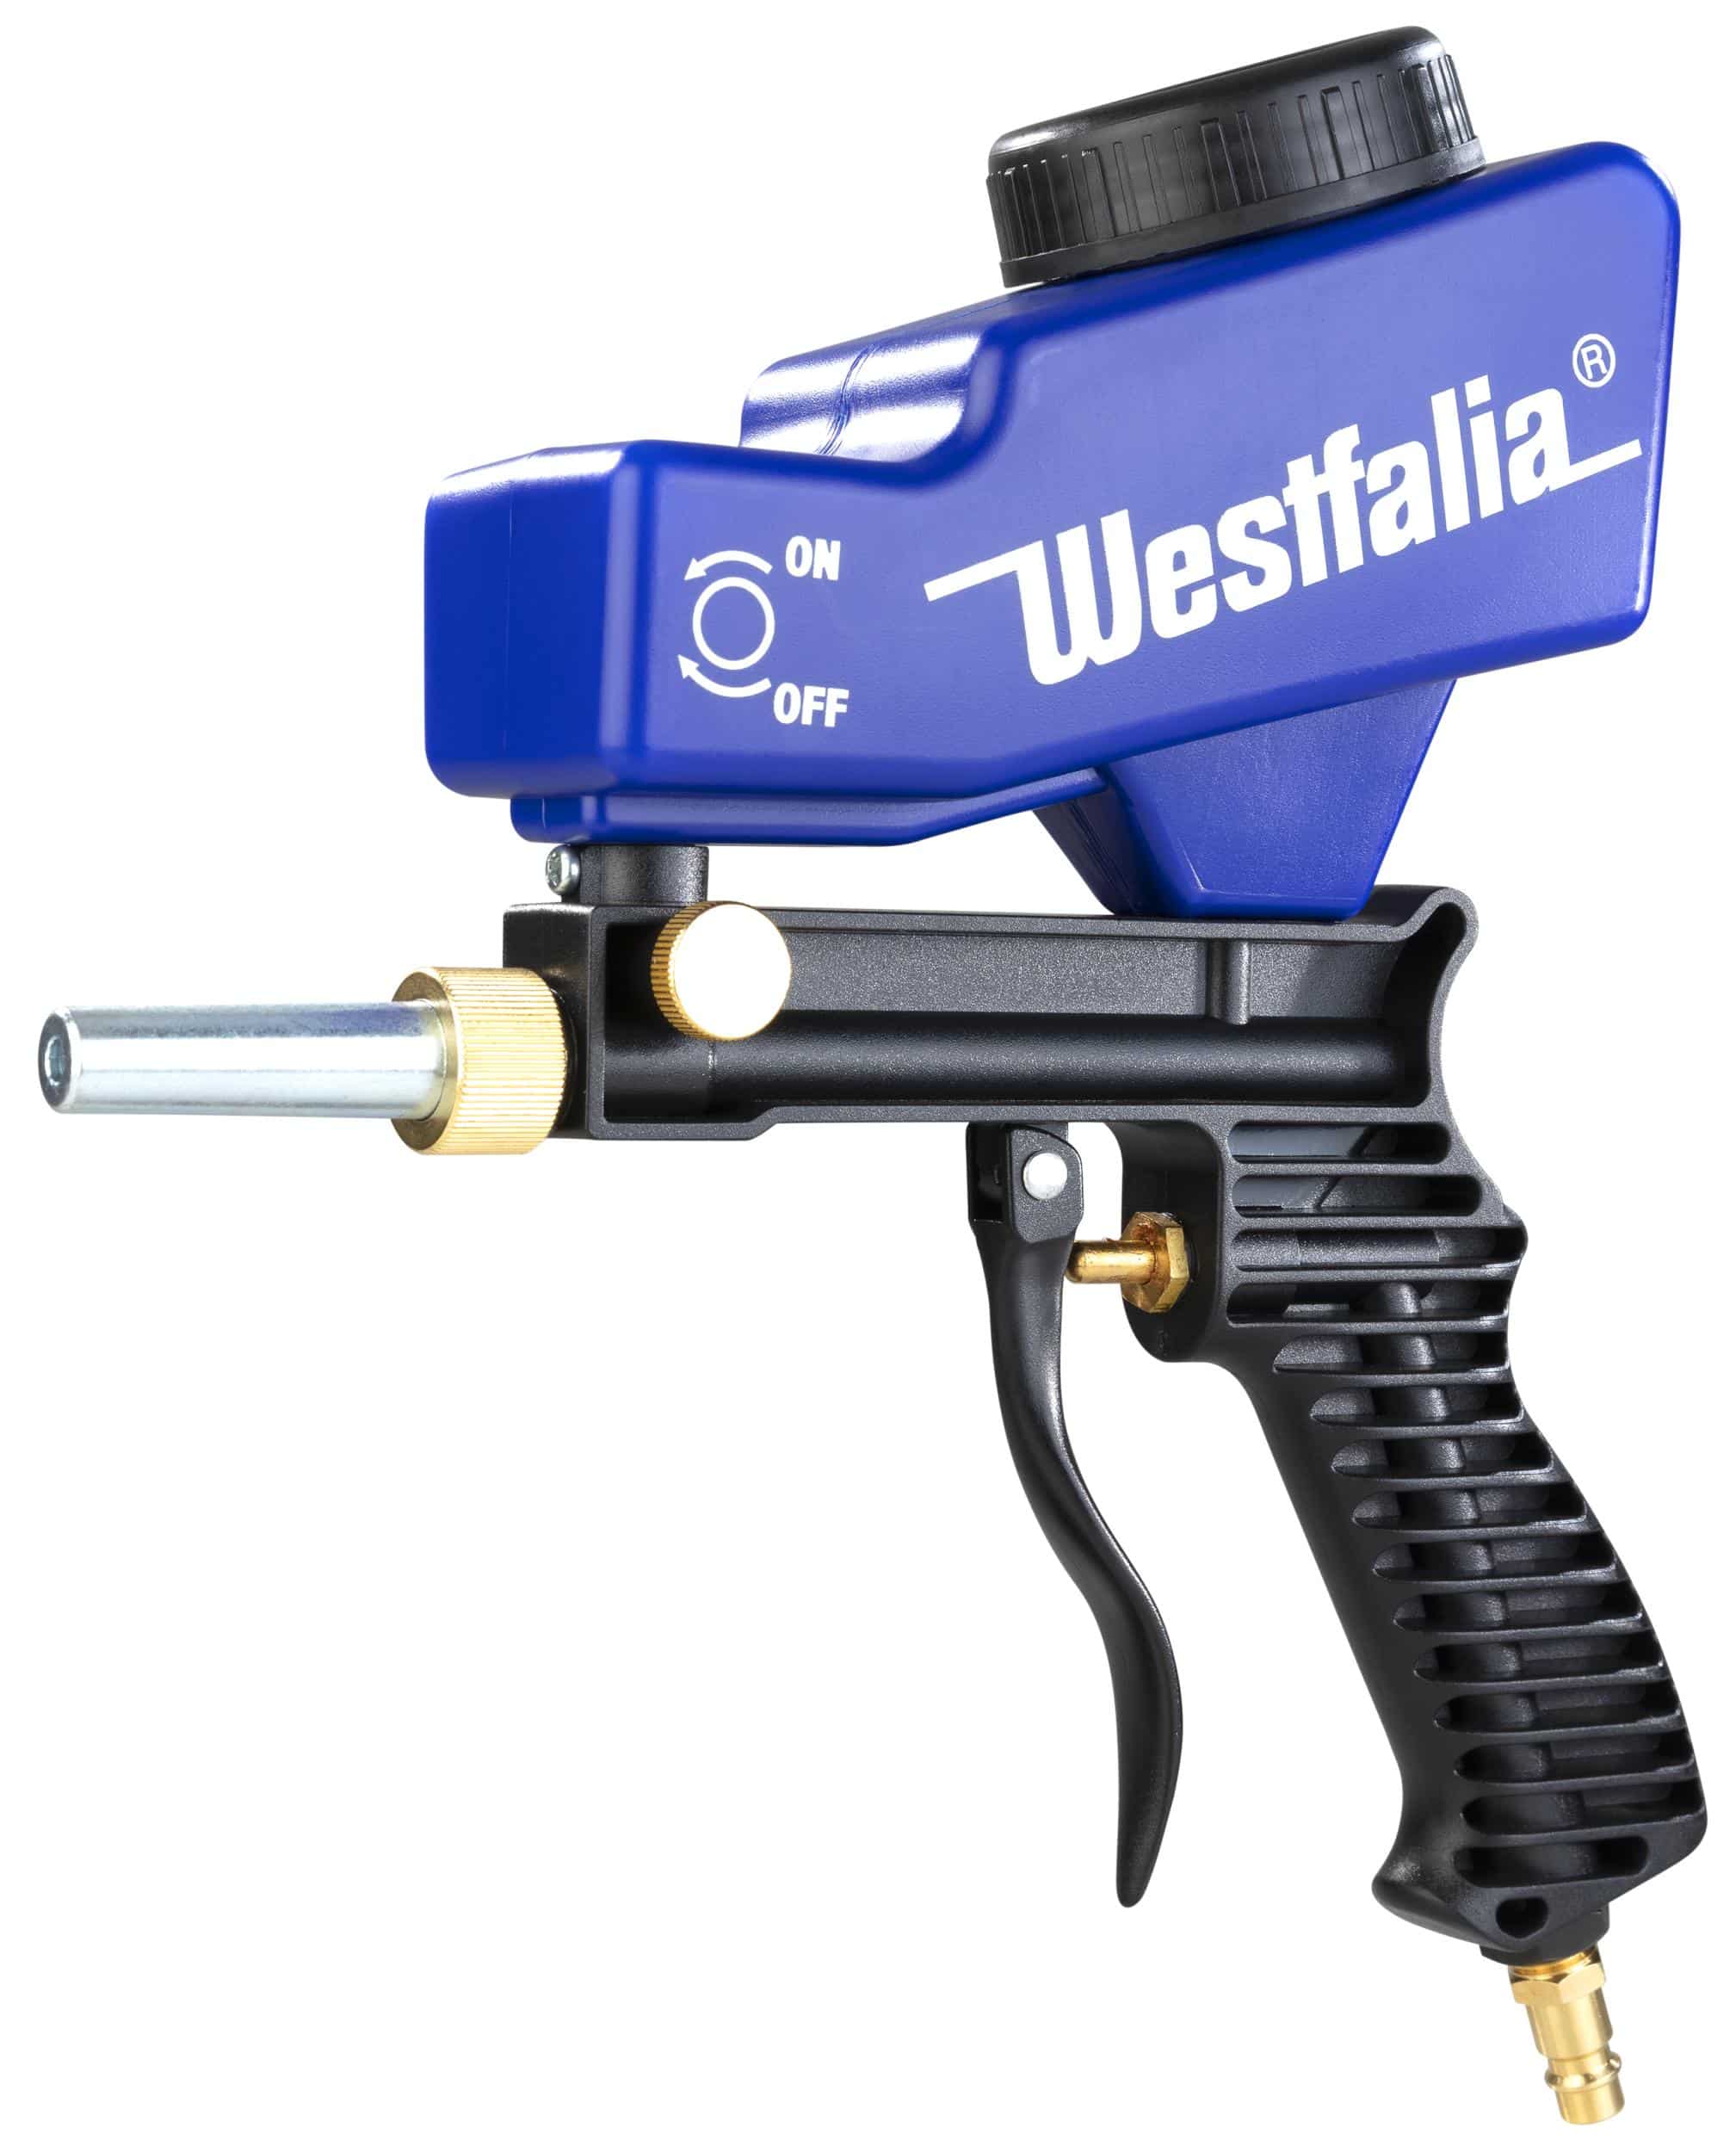 Westfalia Druckluft - Sandstrahlpistole